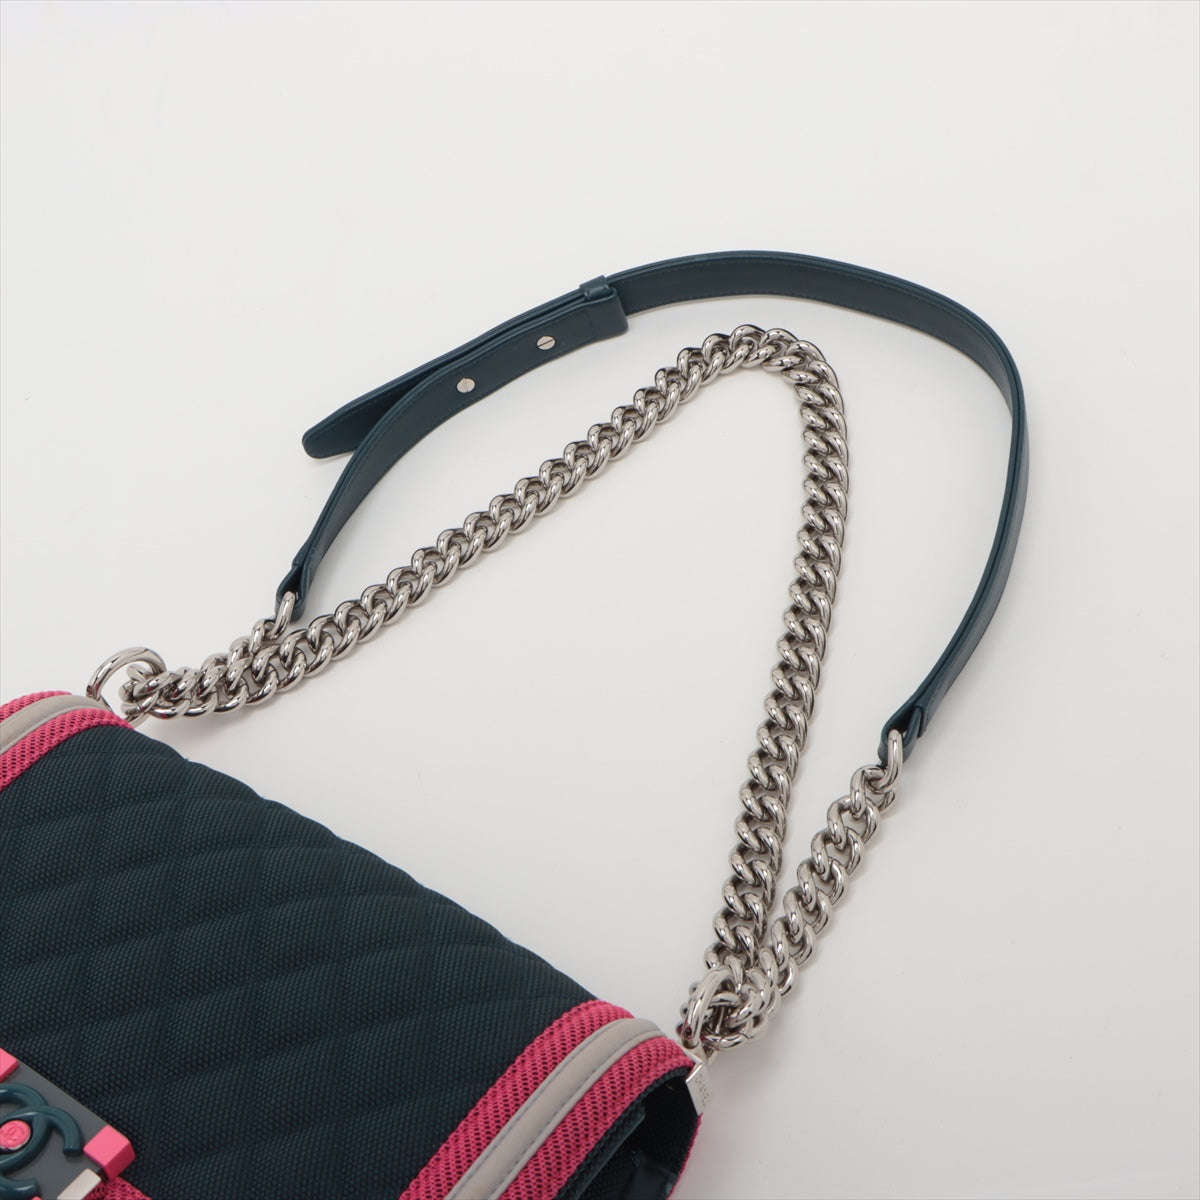 CHANEL Boy Chain Shoulder Bag in Nylon Navy Pink